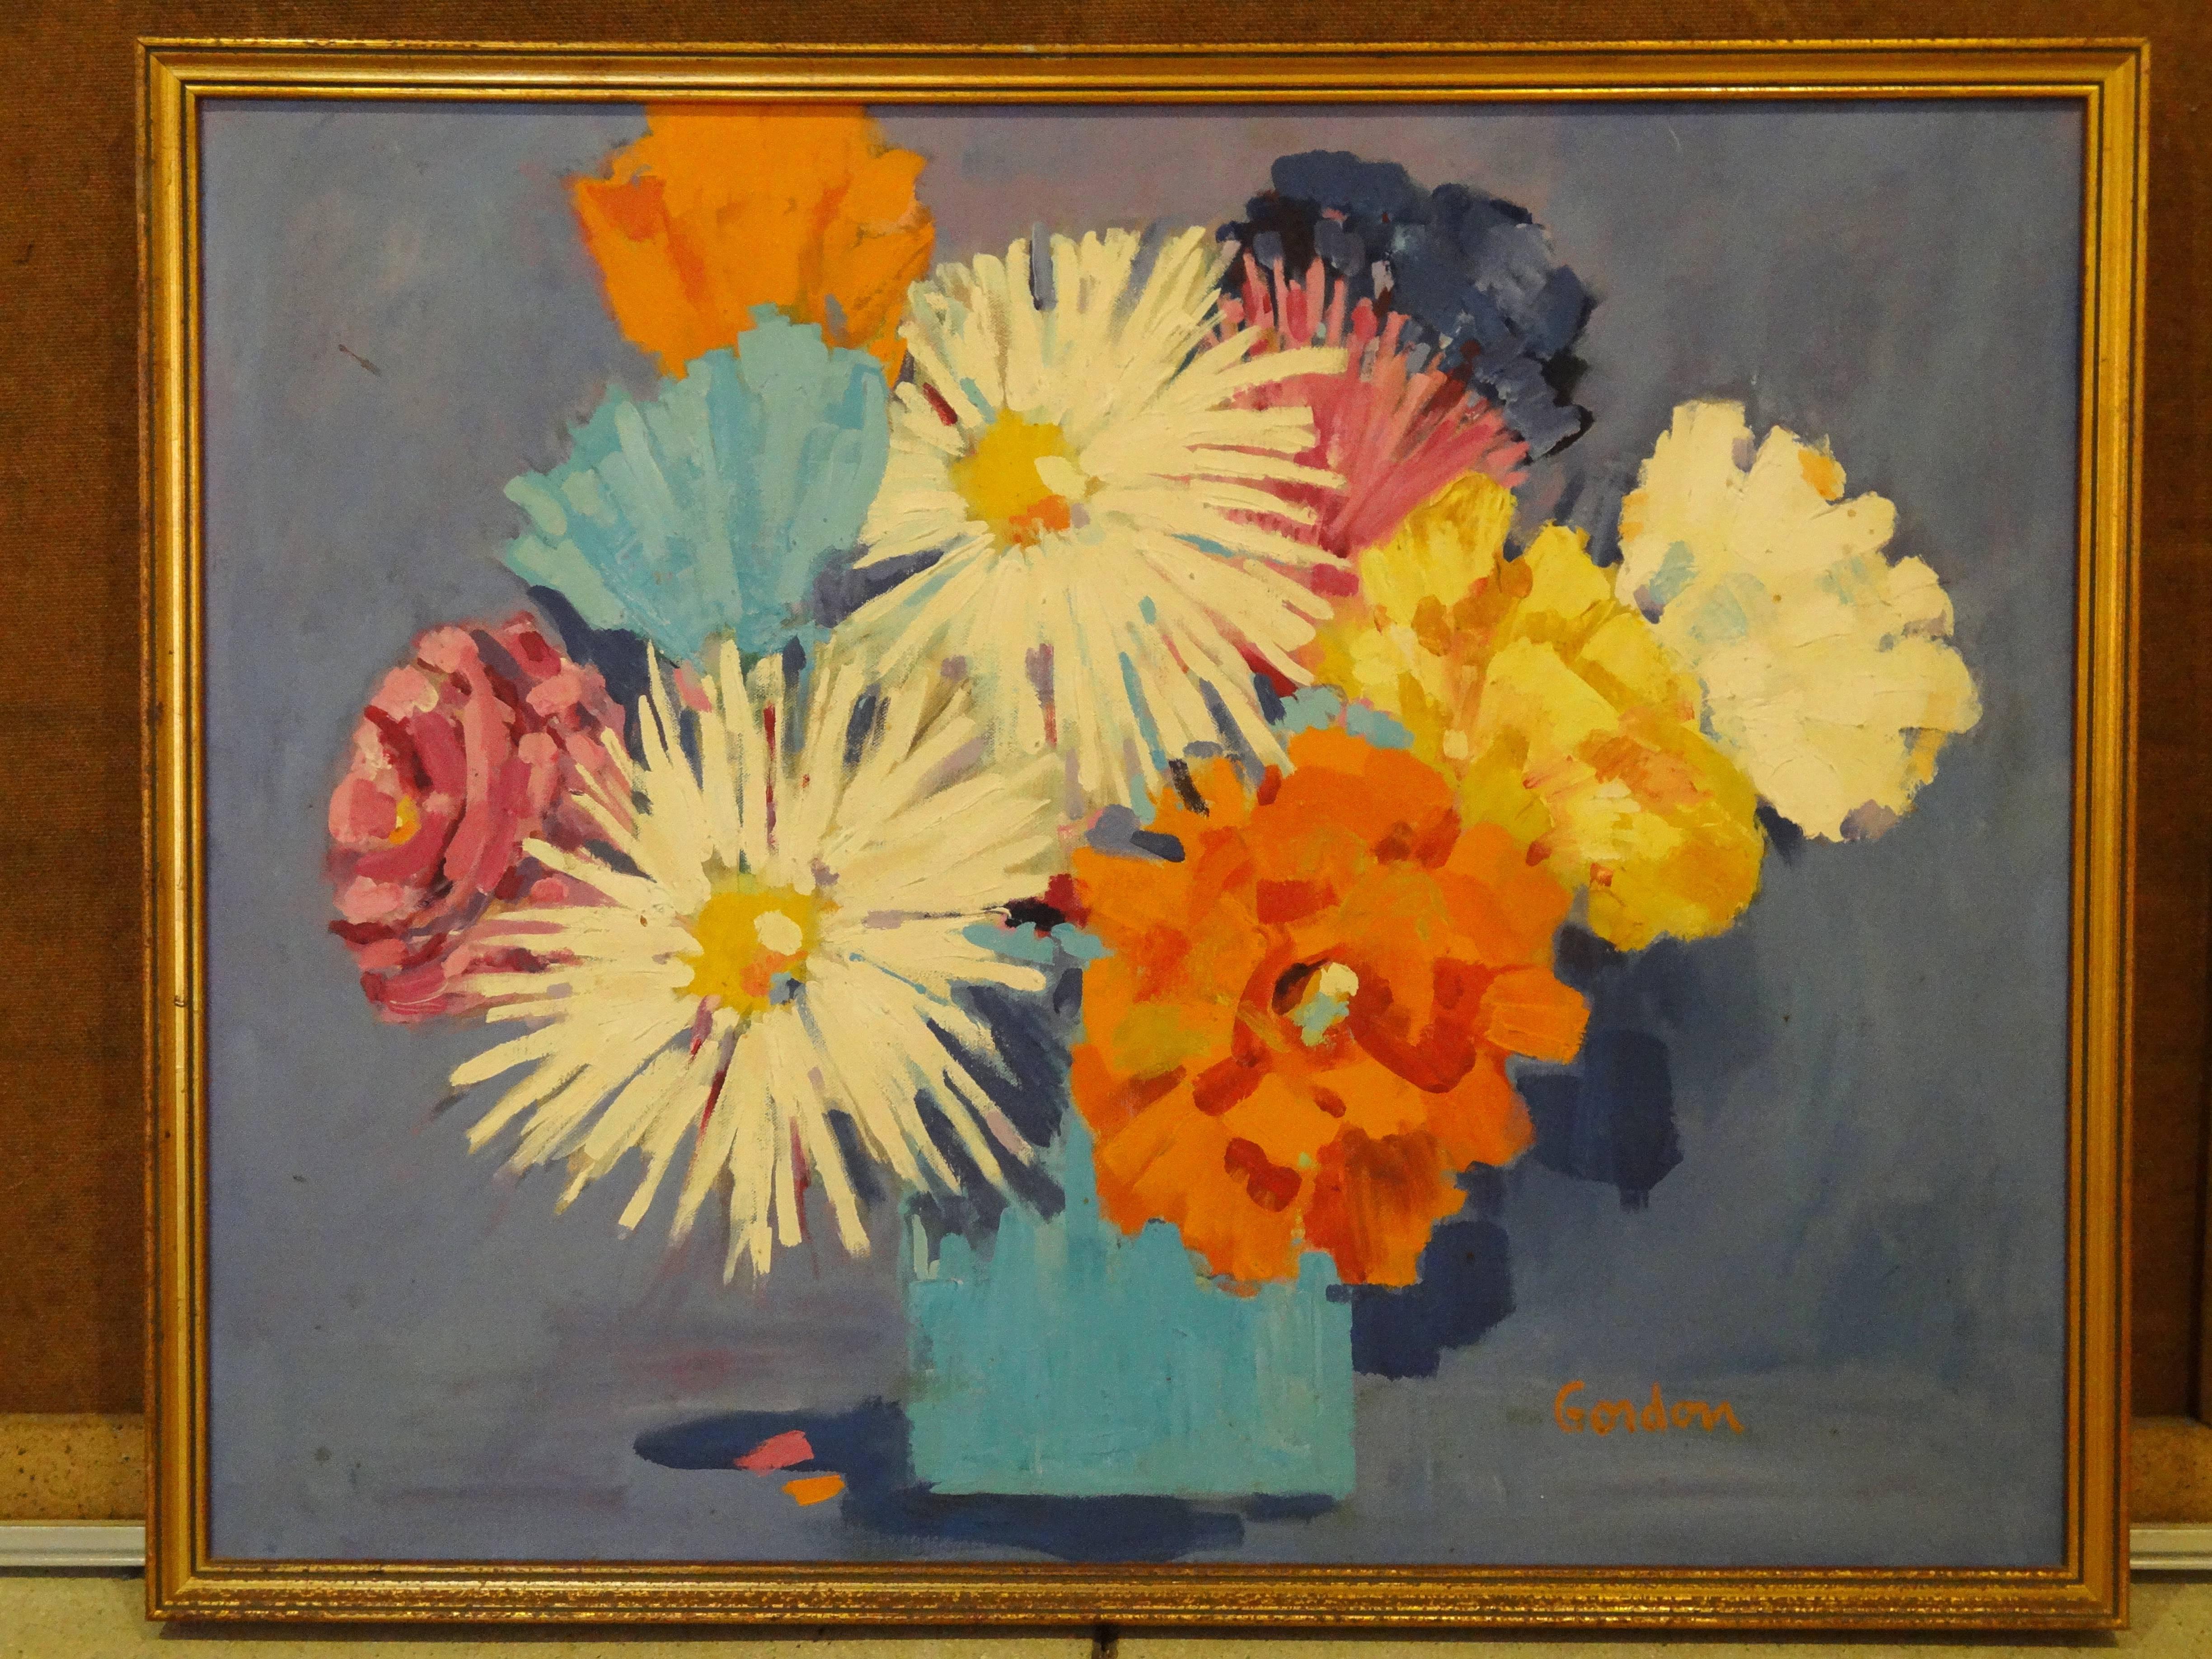 "Flowers" by Gordon